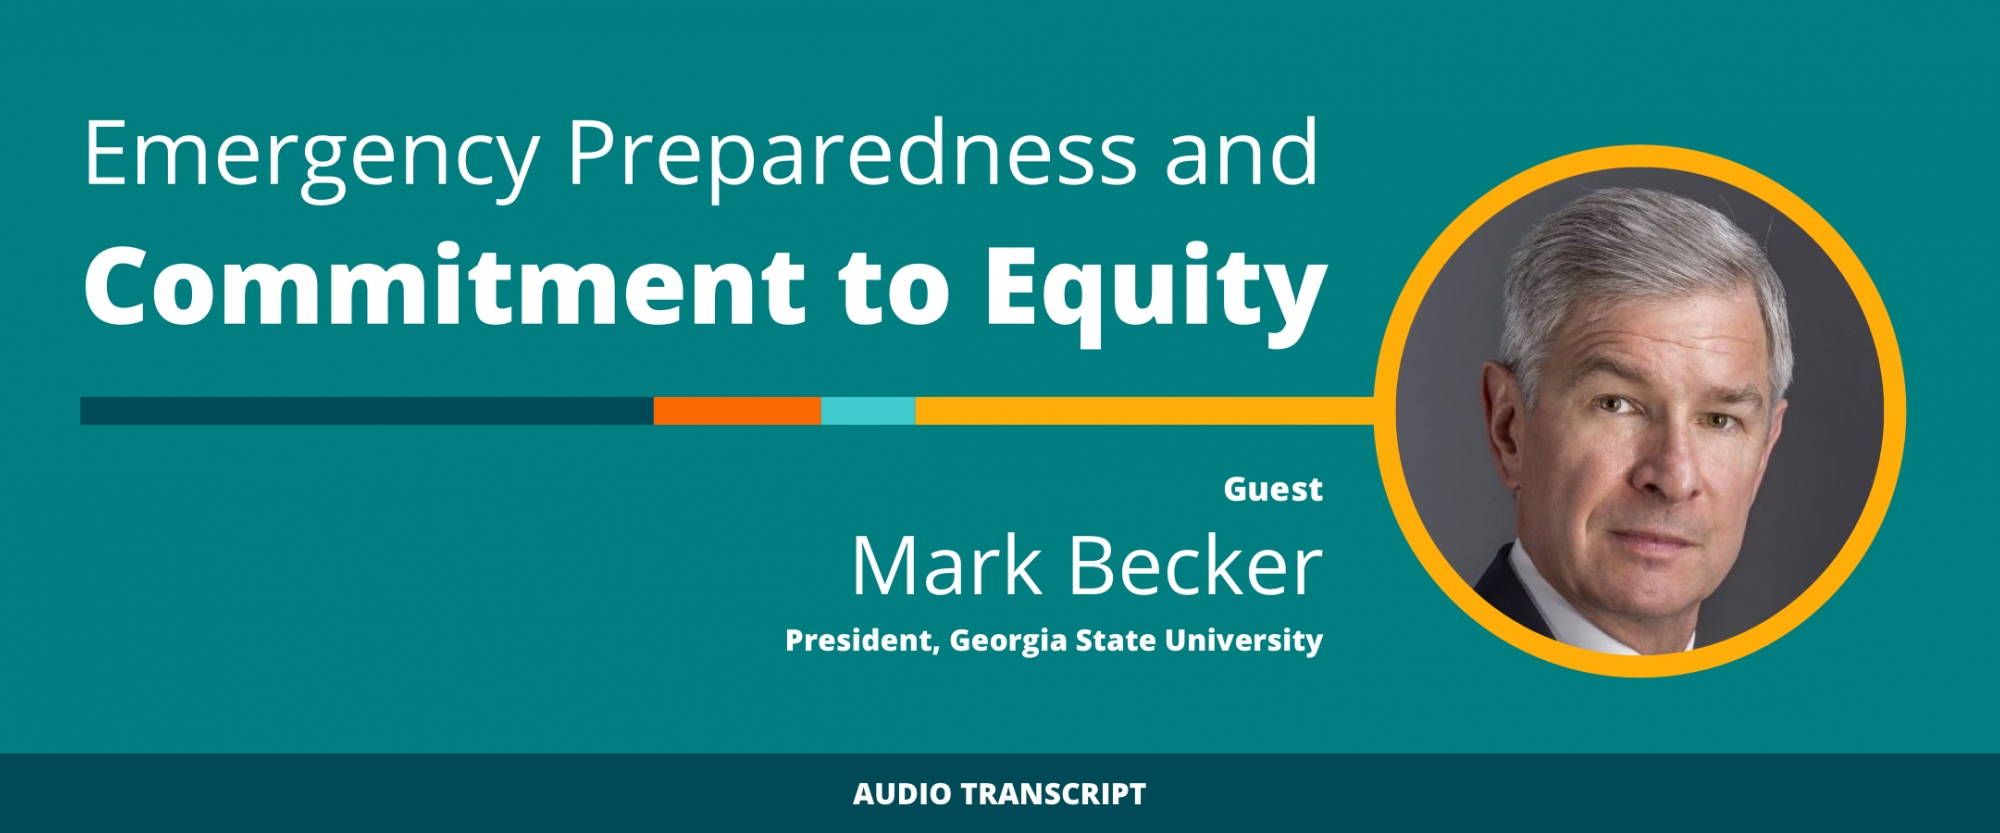 Weekly Wisdom Episode 11: Transcript of Conversation With Mark P. Becker, Georgia State University President